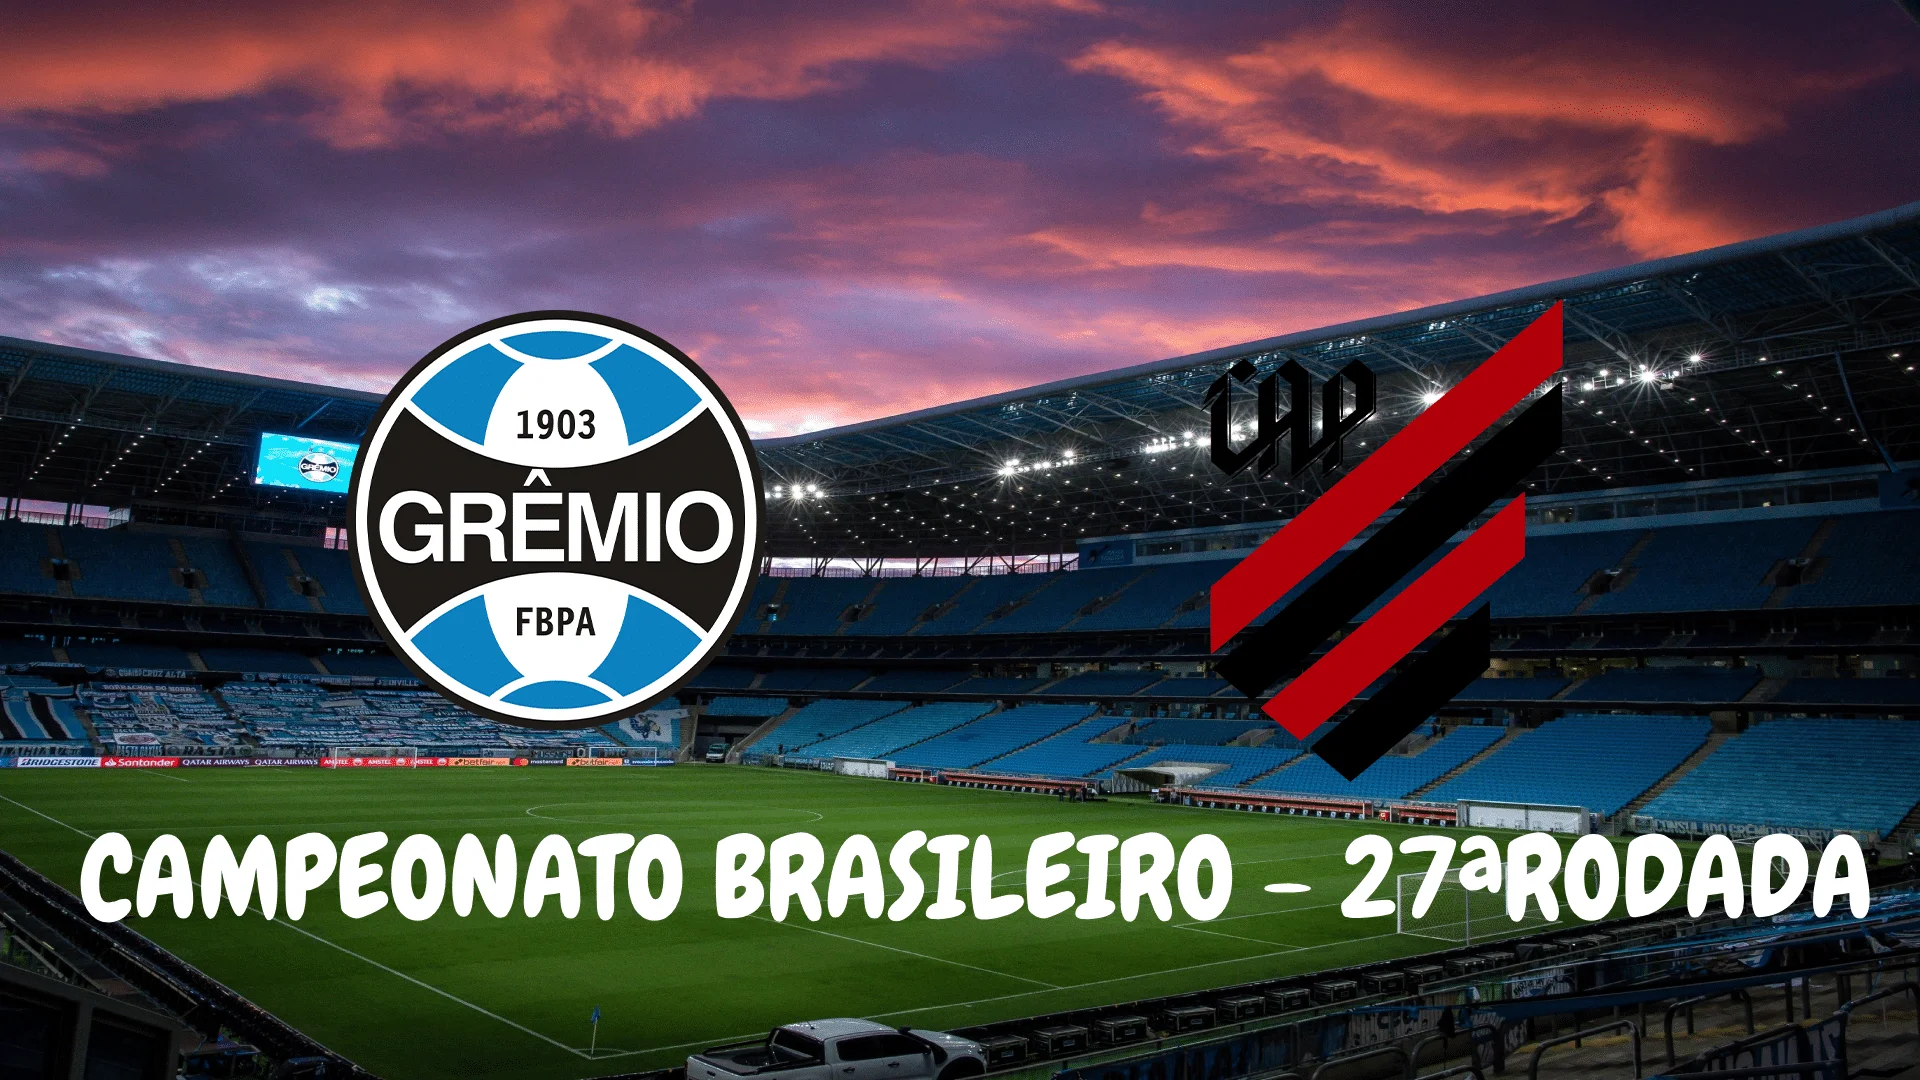 Grêmio vs Caxias: A Rivalry That Transcends Football